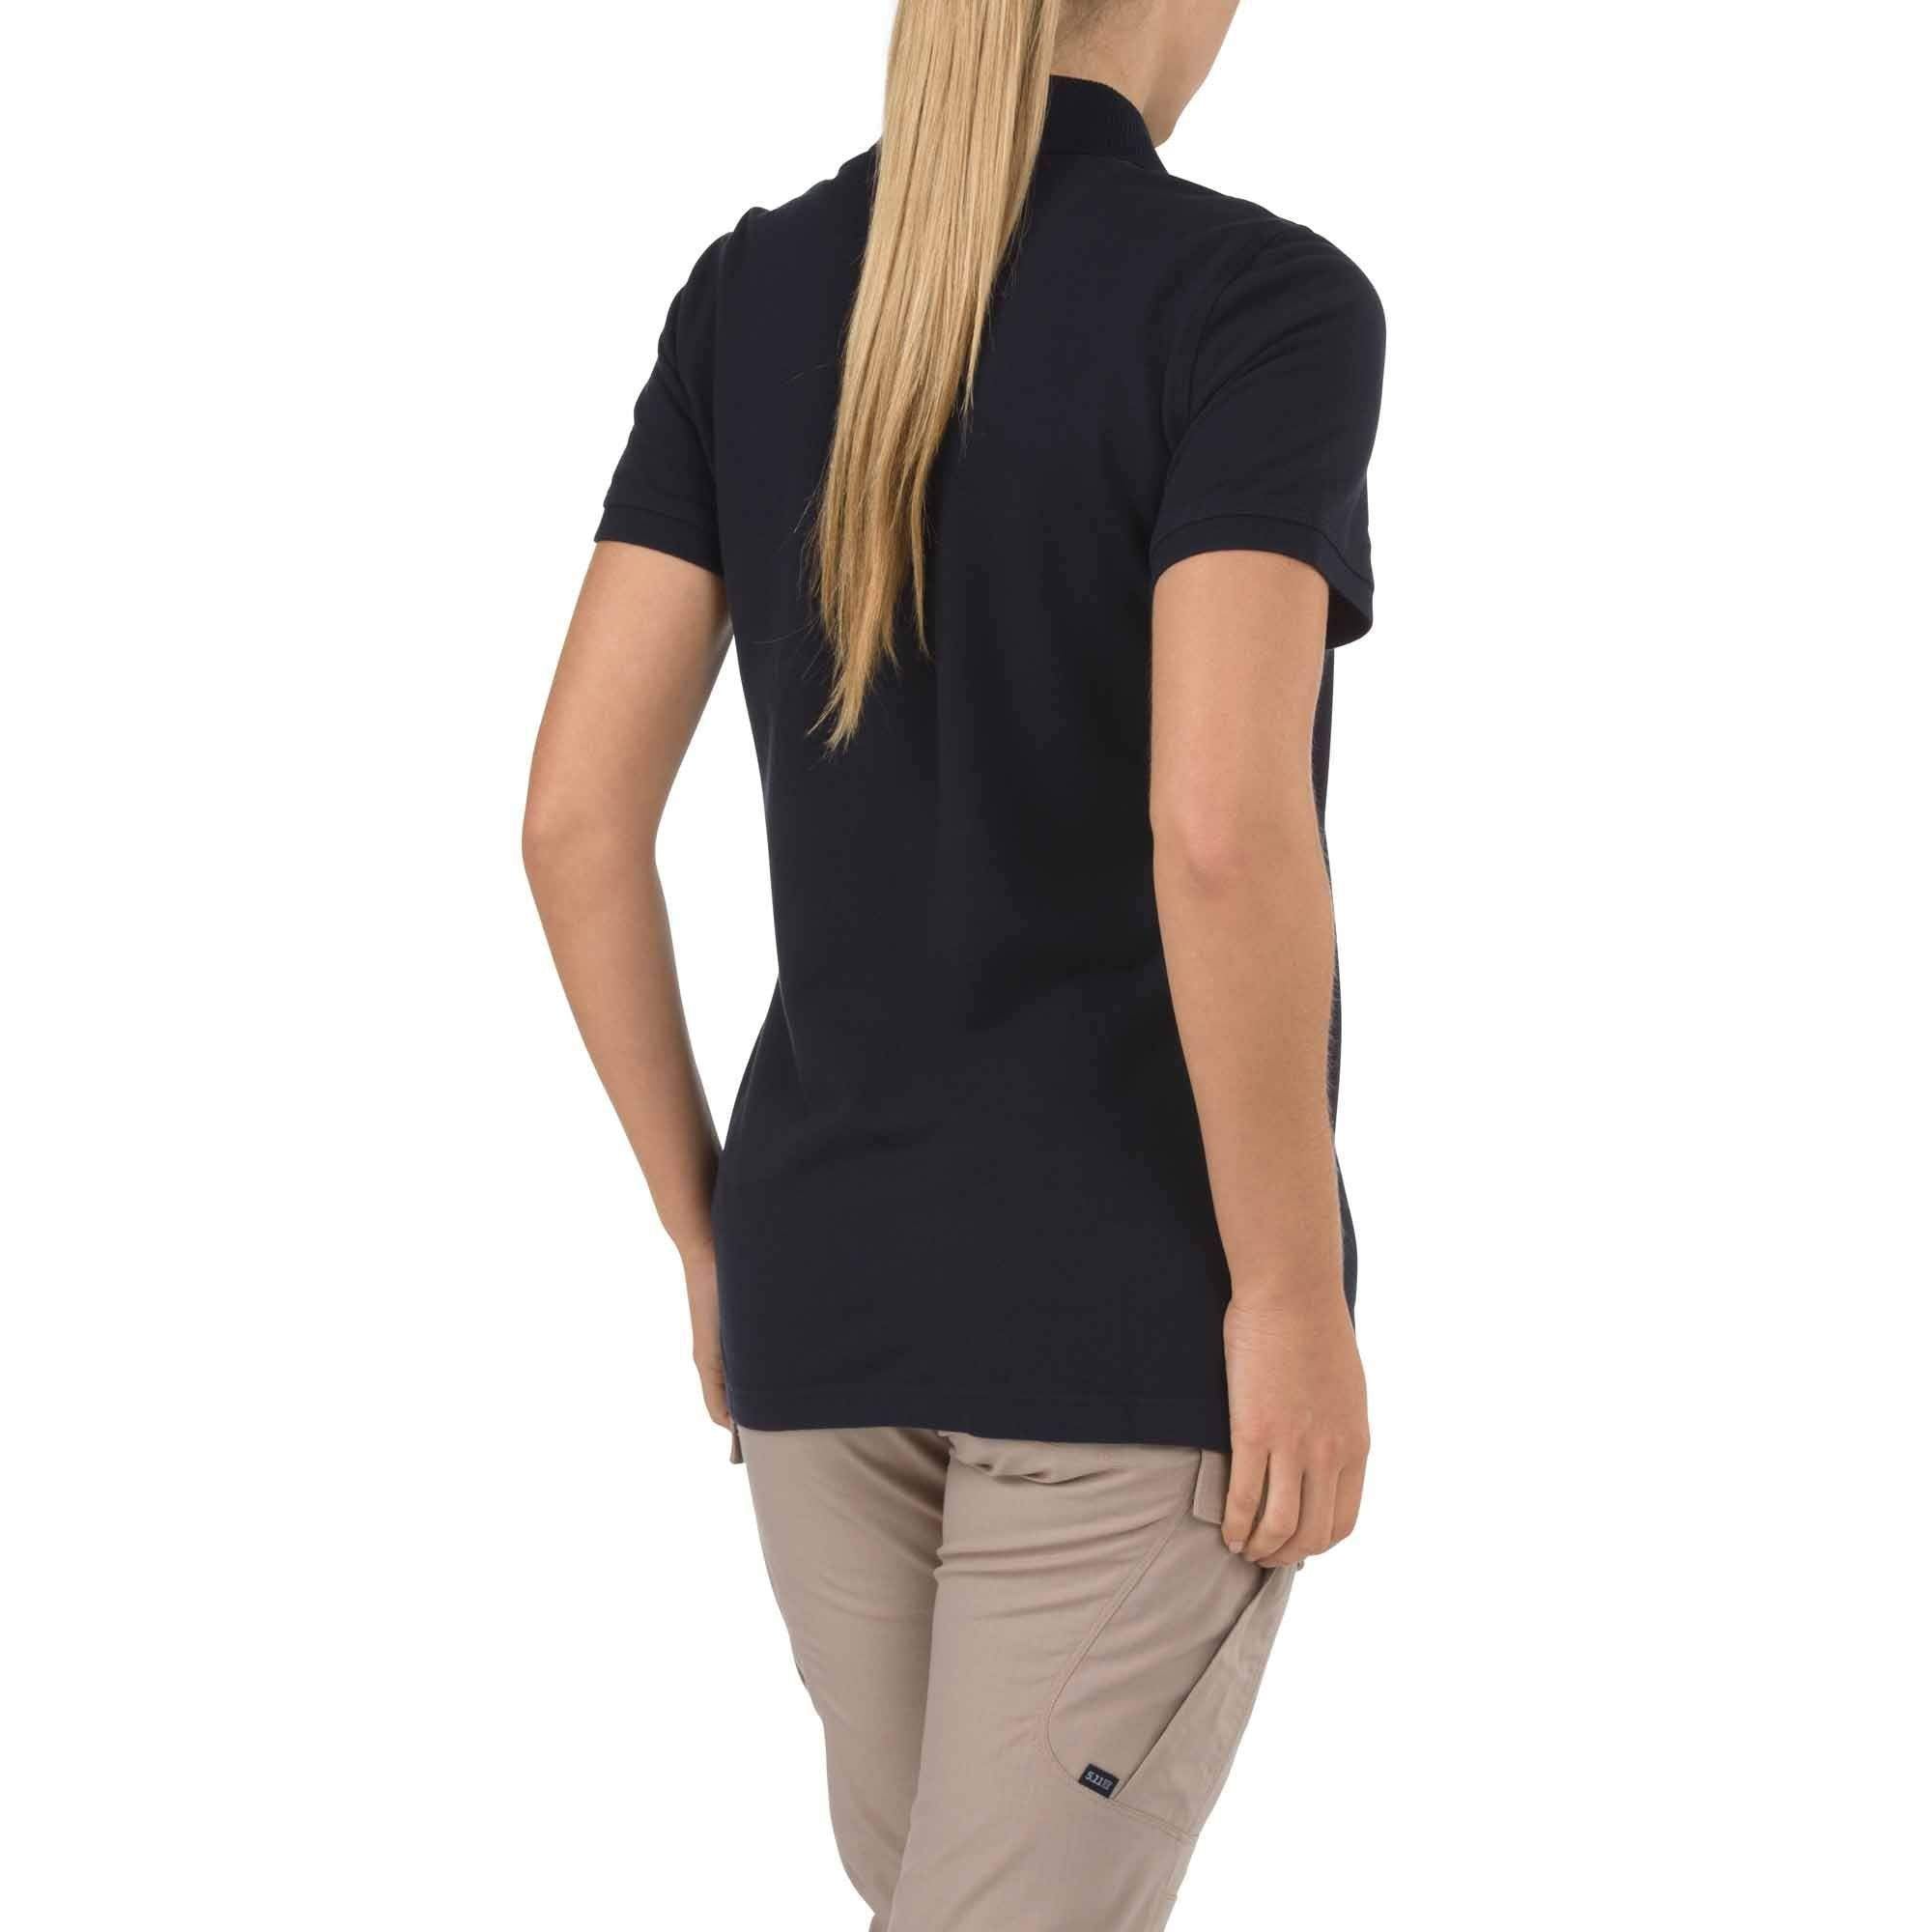 5.11 Tactical Women's Professional Short Sleeve Polo Dark Navy Shirts 5.11 Tactical Small Tactical Gear Supplier Tactical Distributors Australia